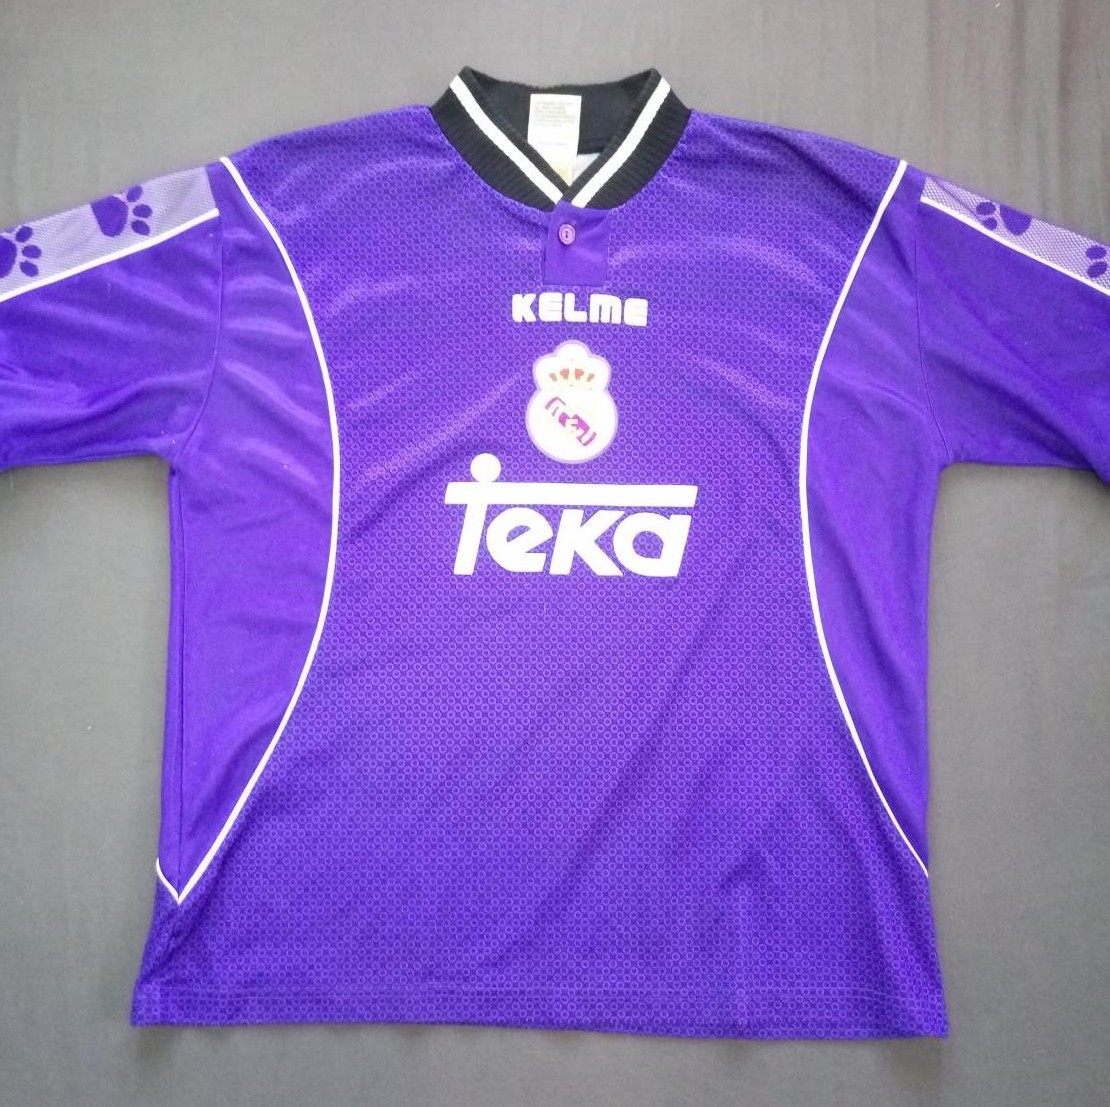 Real Madrid Away football shirt 1997 - 1998. Sponsored by Teka